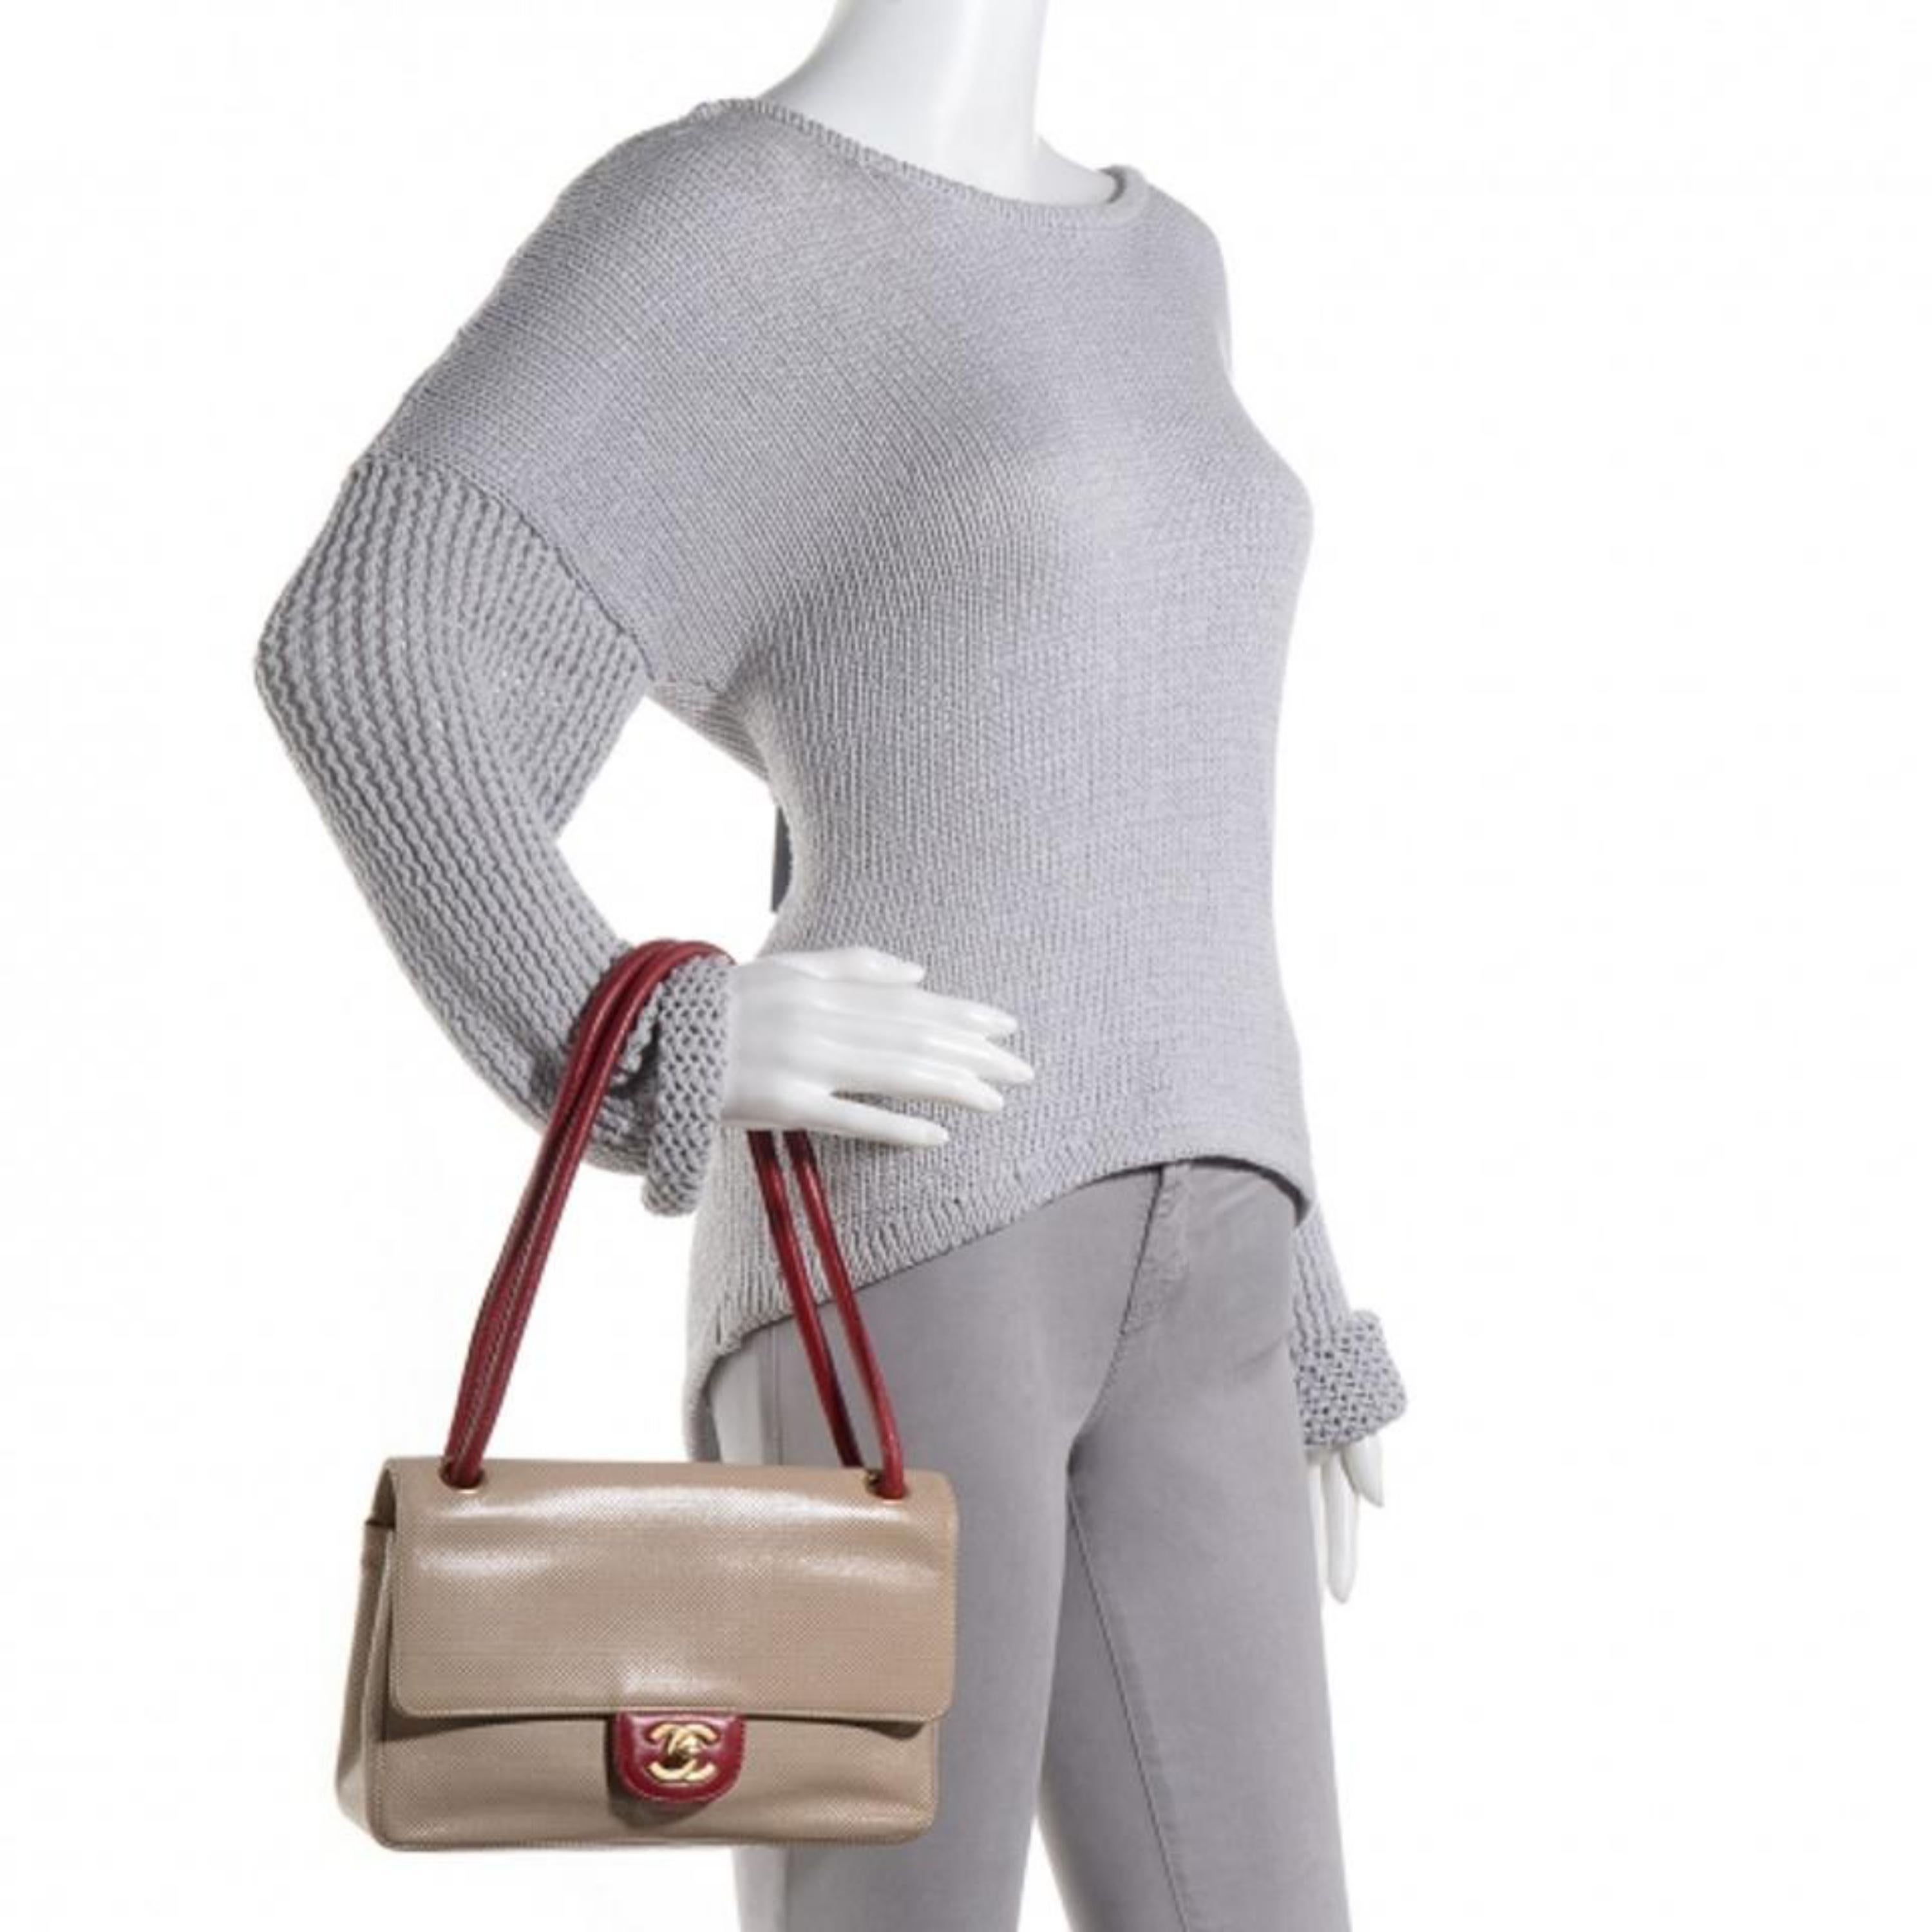 Chanel Classic Bicolor Perforated Medium Flap 216613 Beige Leather Shoulder Bag For Sale 6